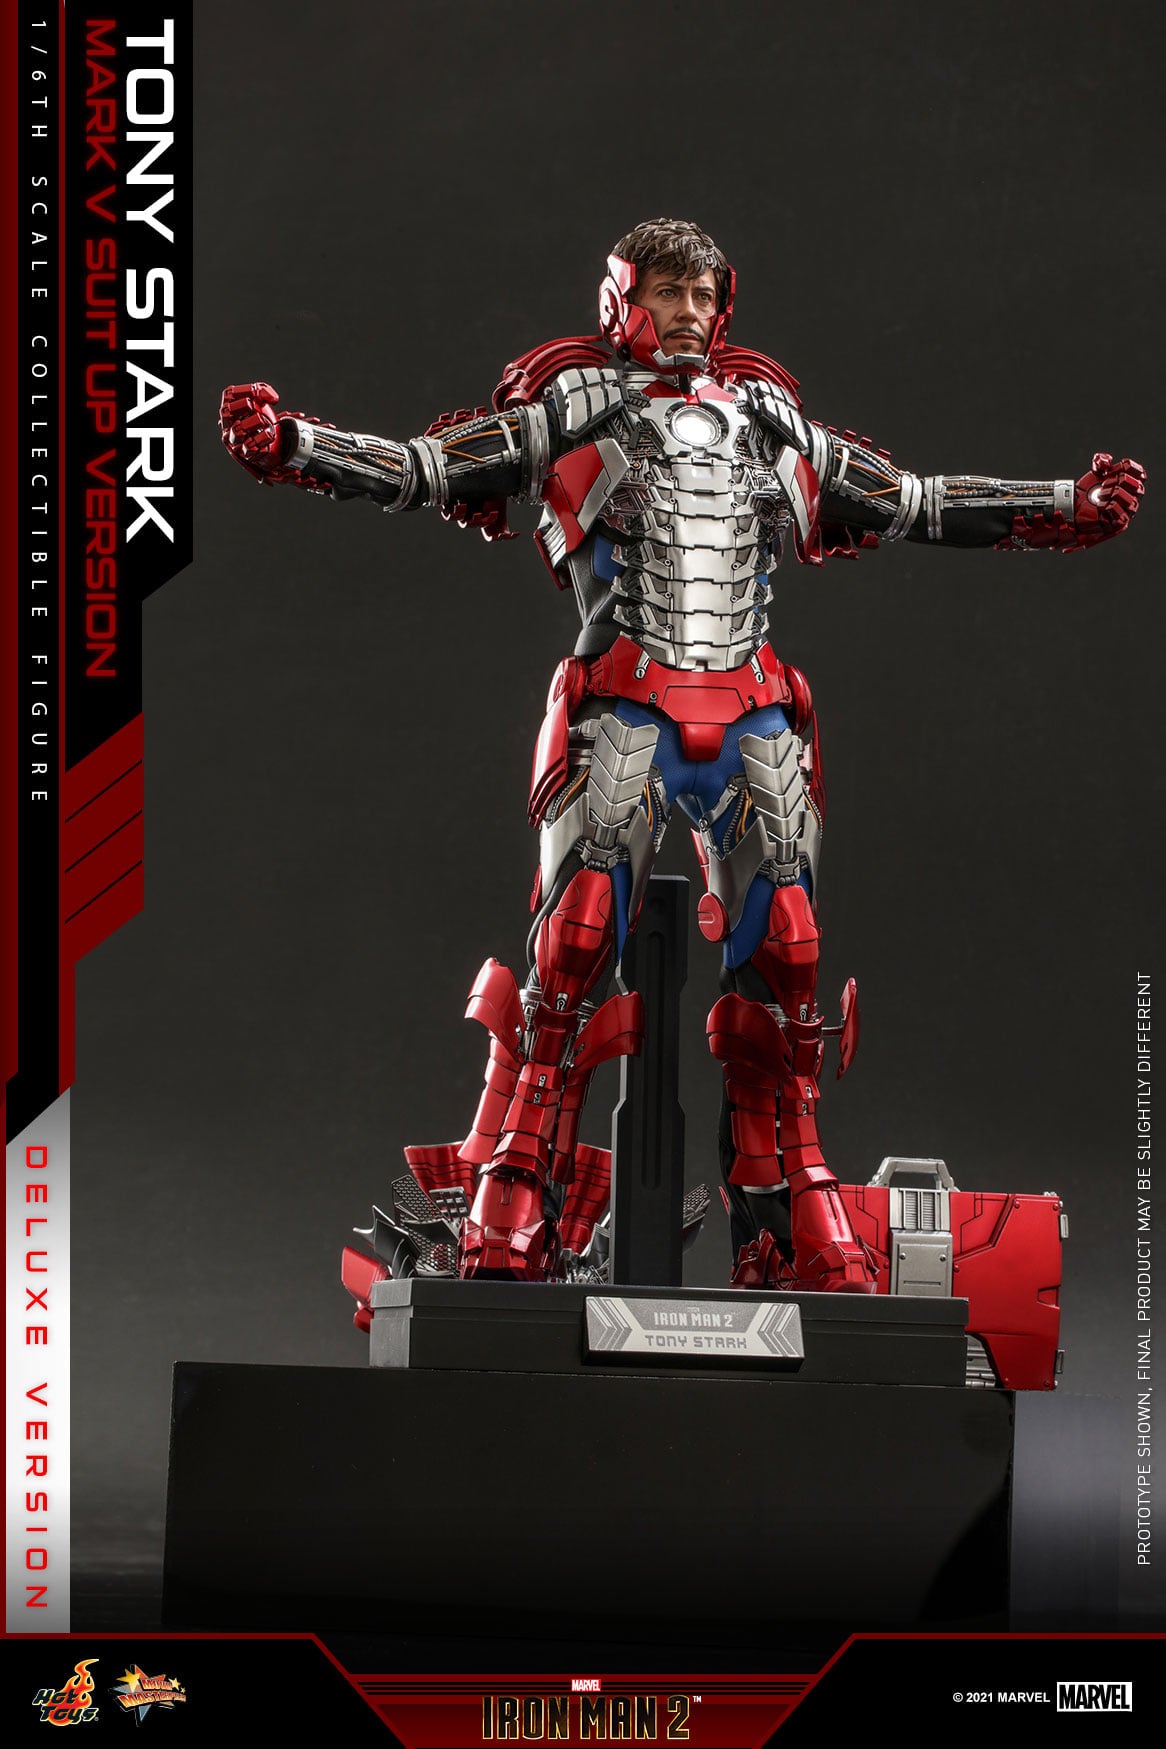 Hot Toys - MMS600 - Iron Man 2 - Tony Stark (Mark V Suit Up Ver.) (Deluxe Ver.) - Marvelous Toys